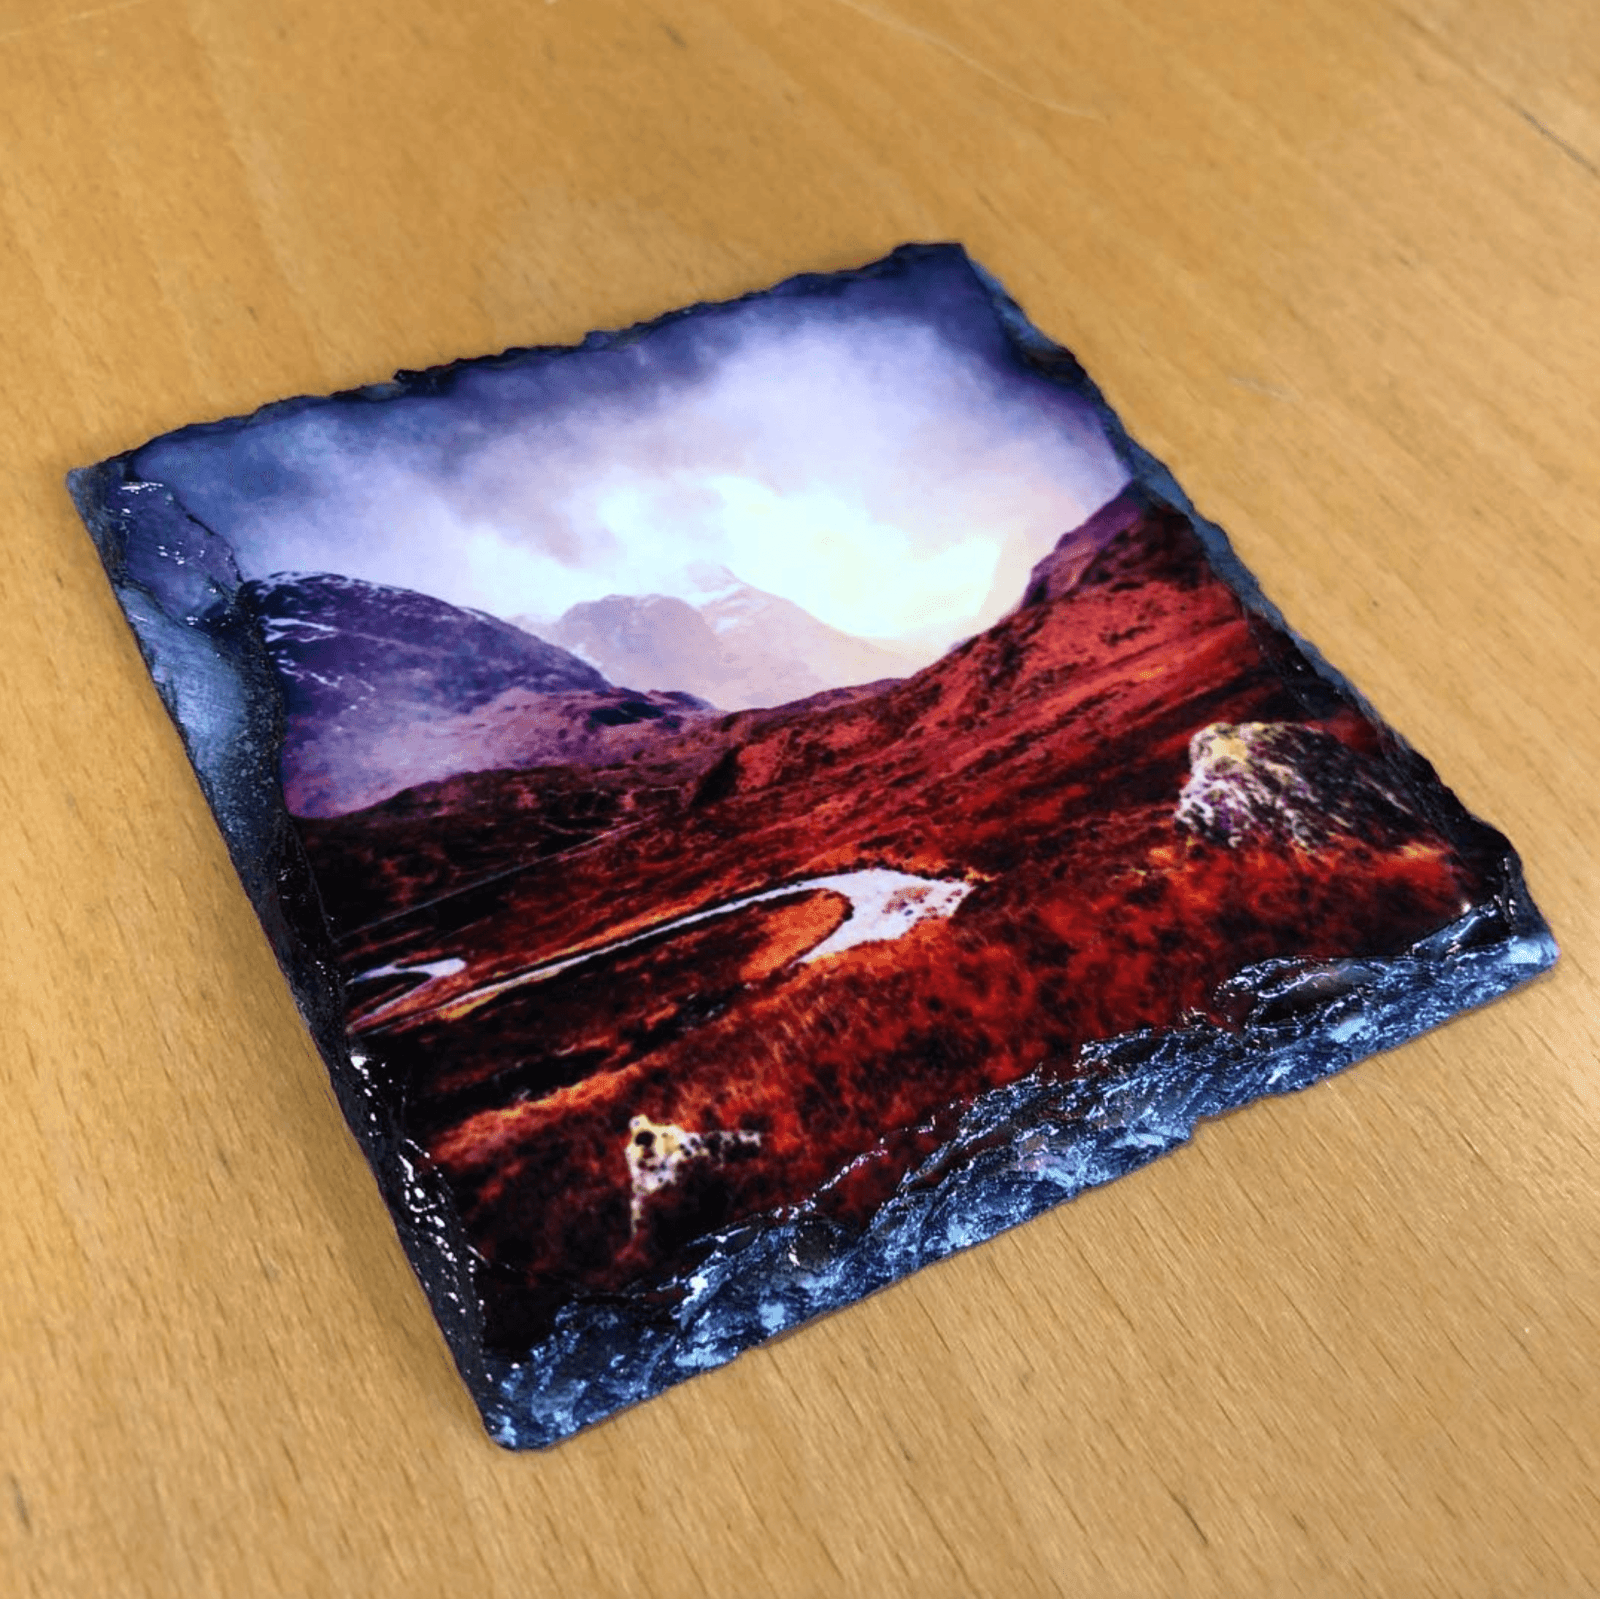 The Quiraing Skye Scottish Slate Art-Slate Art-Skye Art Gallery-Paintings, Prints, Homeware, Art Gifts From Scotland By Scottish Artist Kevin Hunter